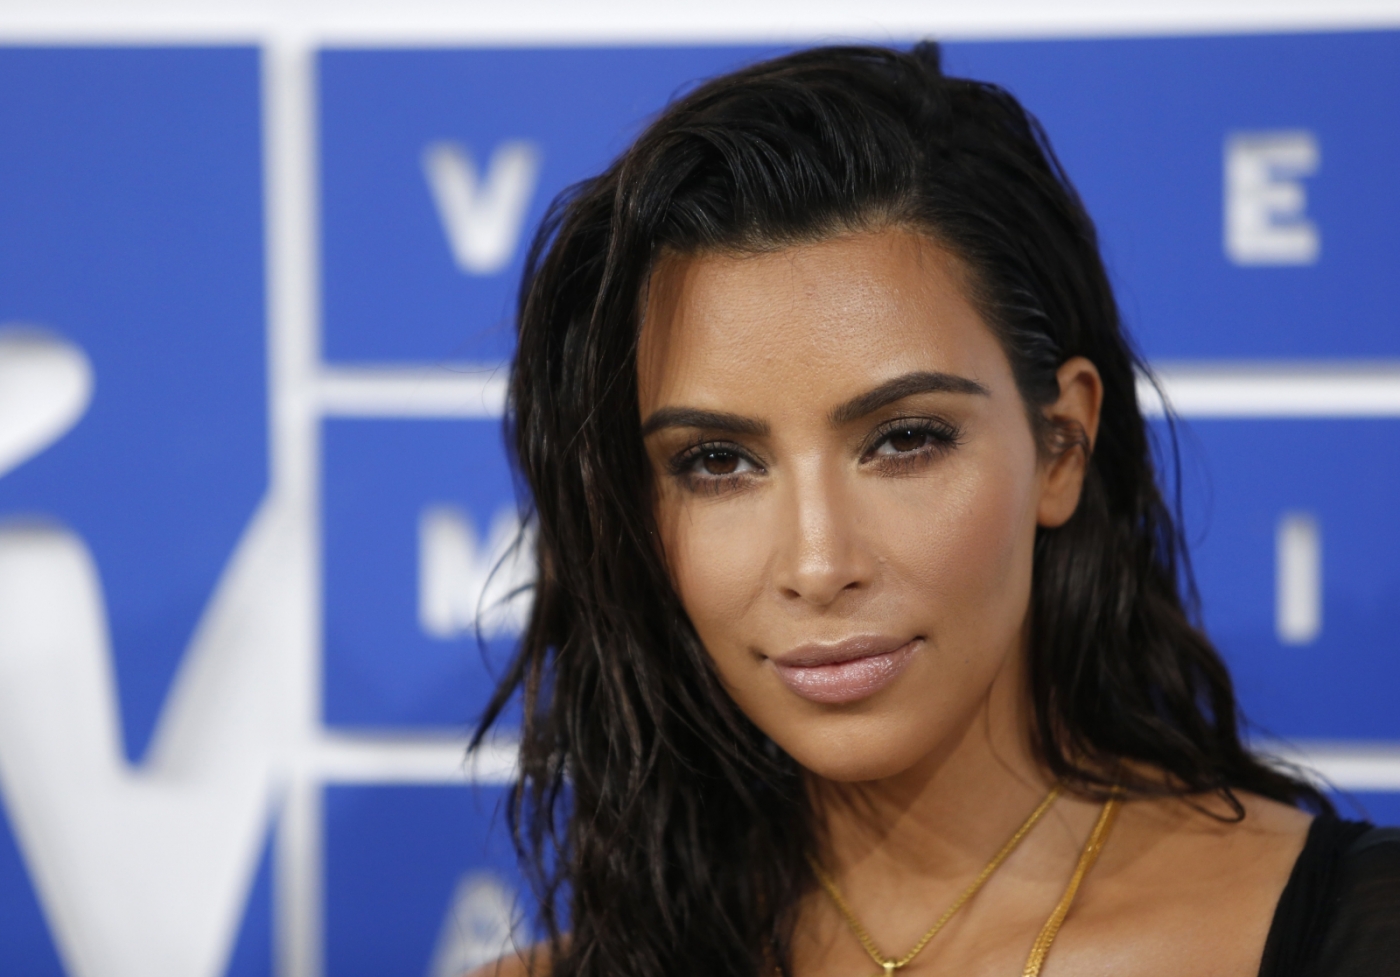 Kim kardashian hot images | Kim Kardashian flaunts slimmed-down beach body  in white hot bikini